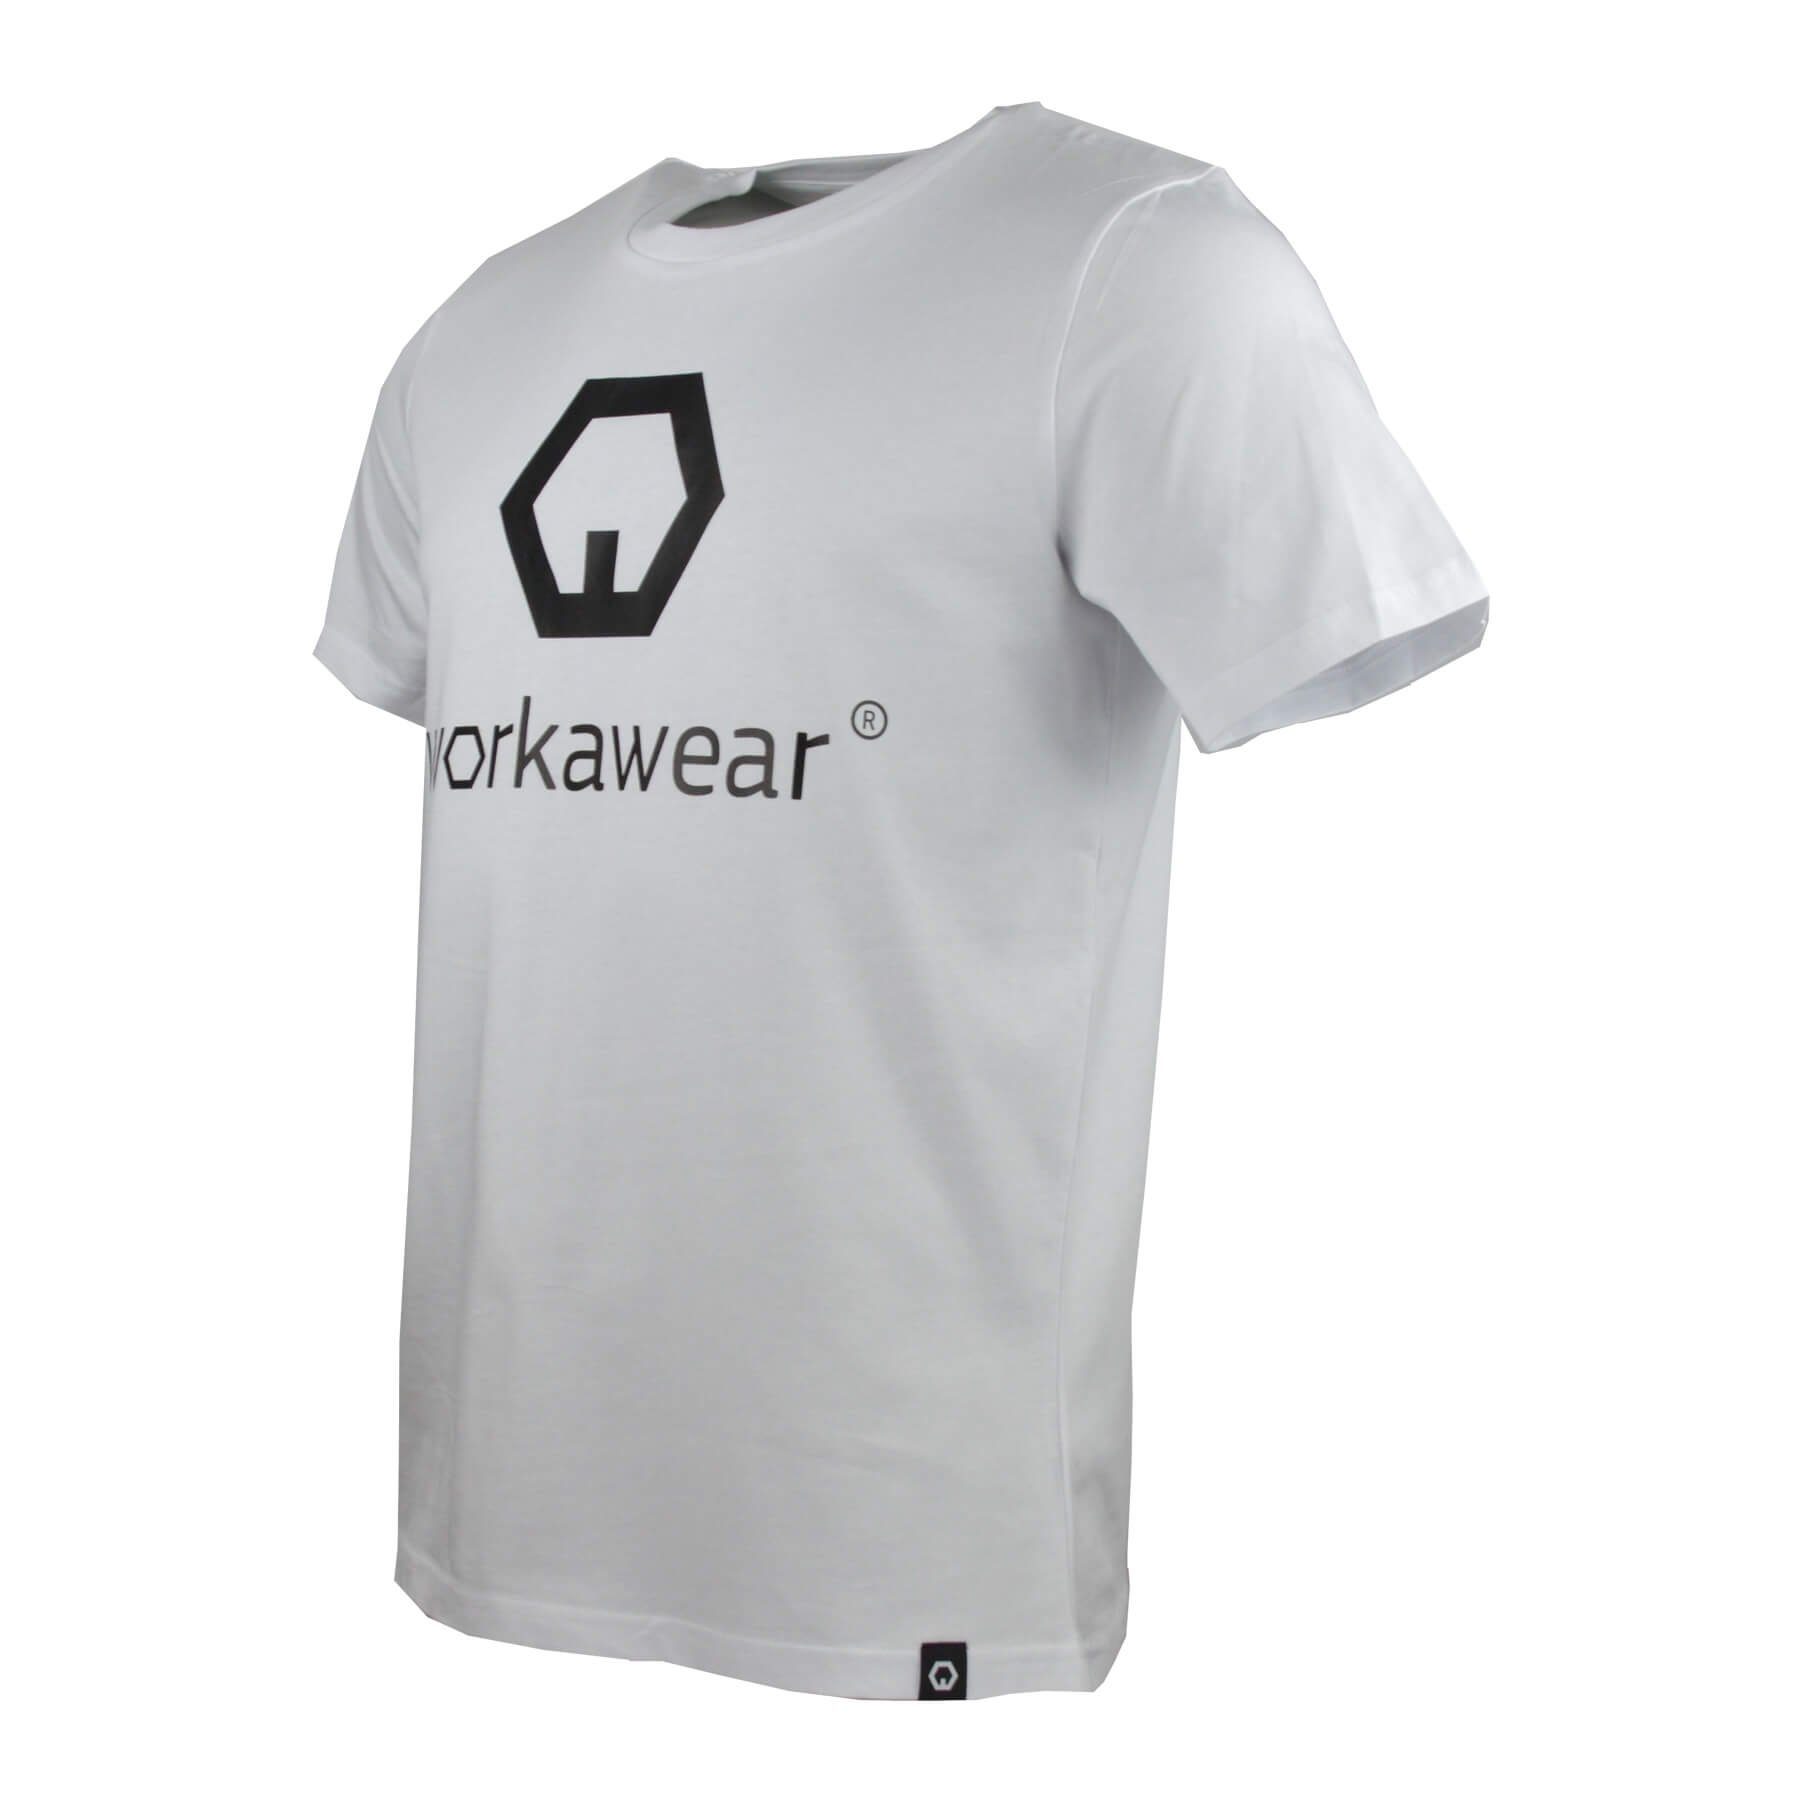 workawear T-Shirt Bio T-Shirt 100% & Bio Workawear nachhaltig Baumwolle, fair